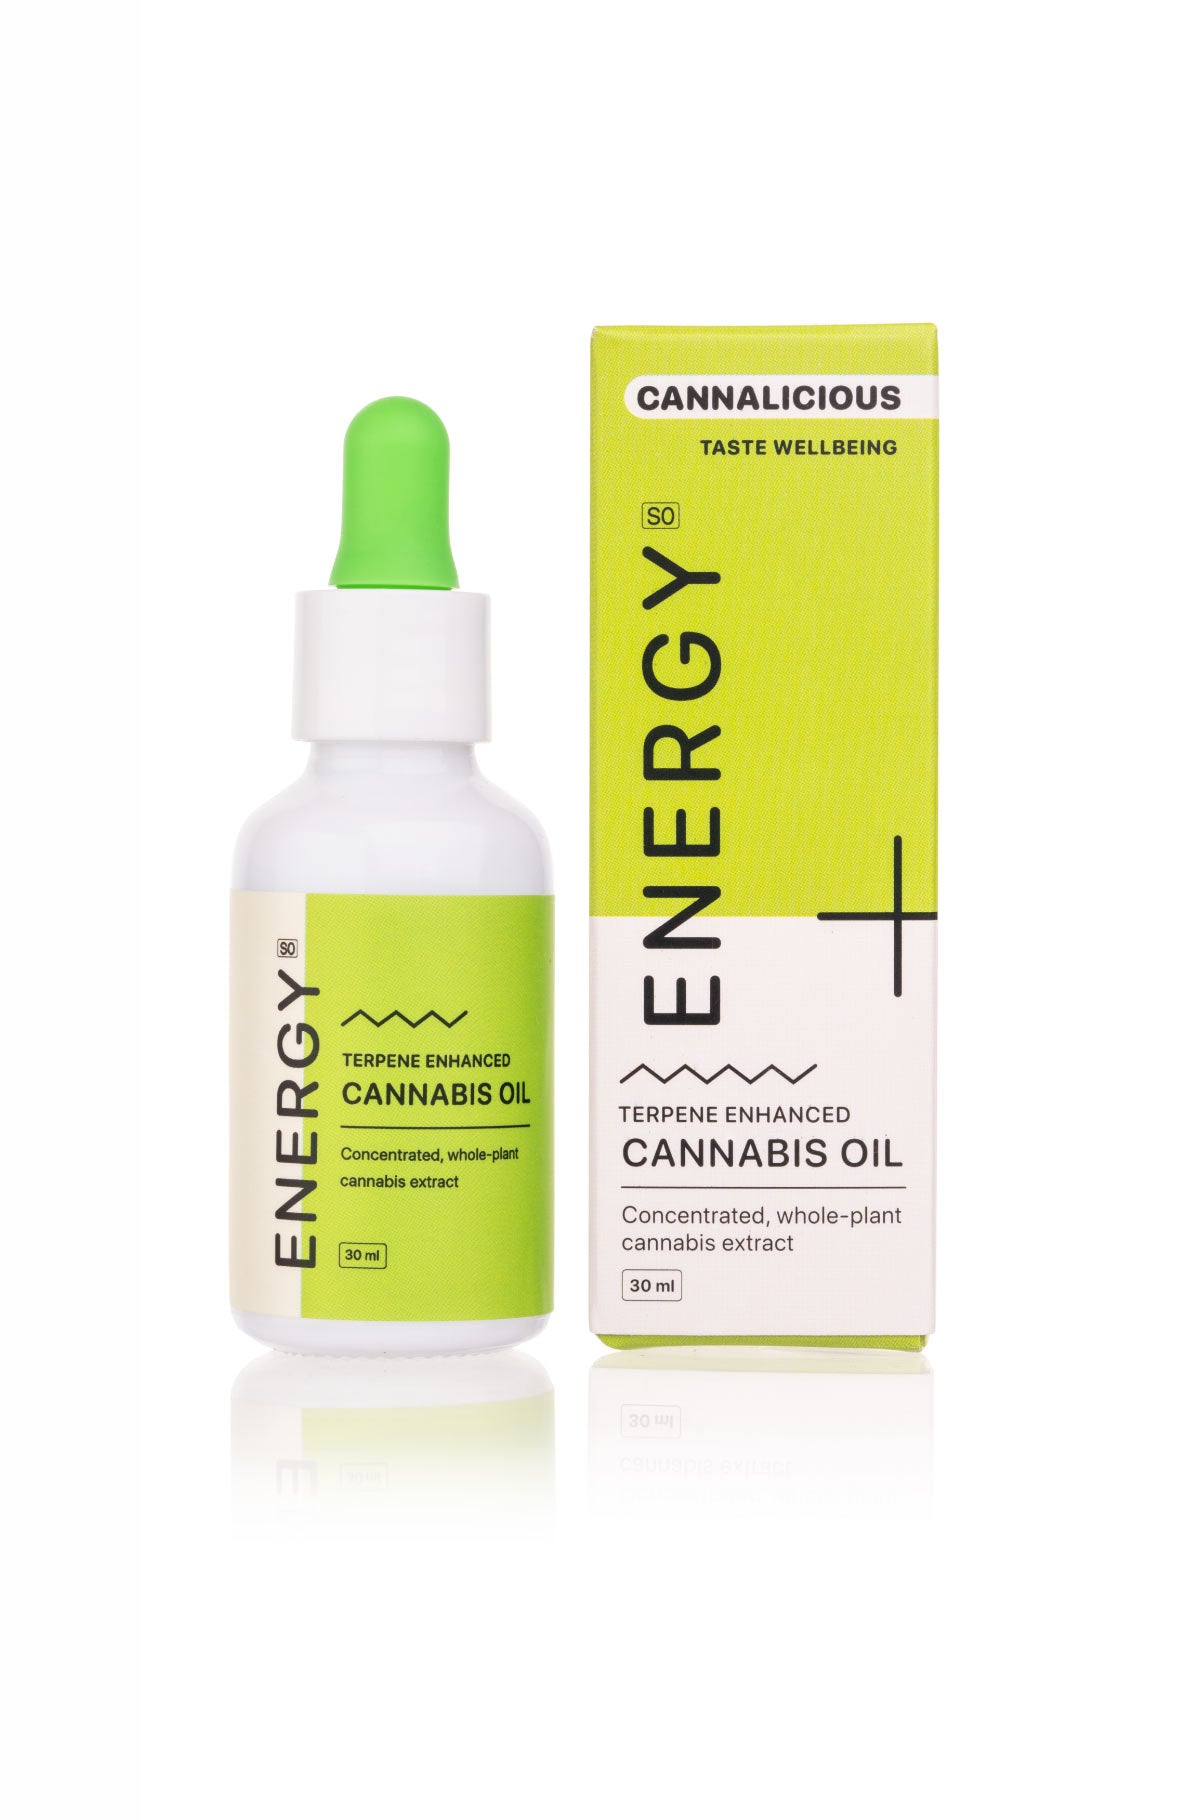 Full Extract Cannabis Oil – ENERGY Boost